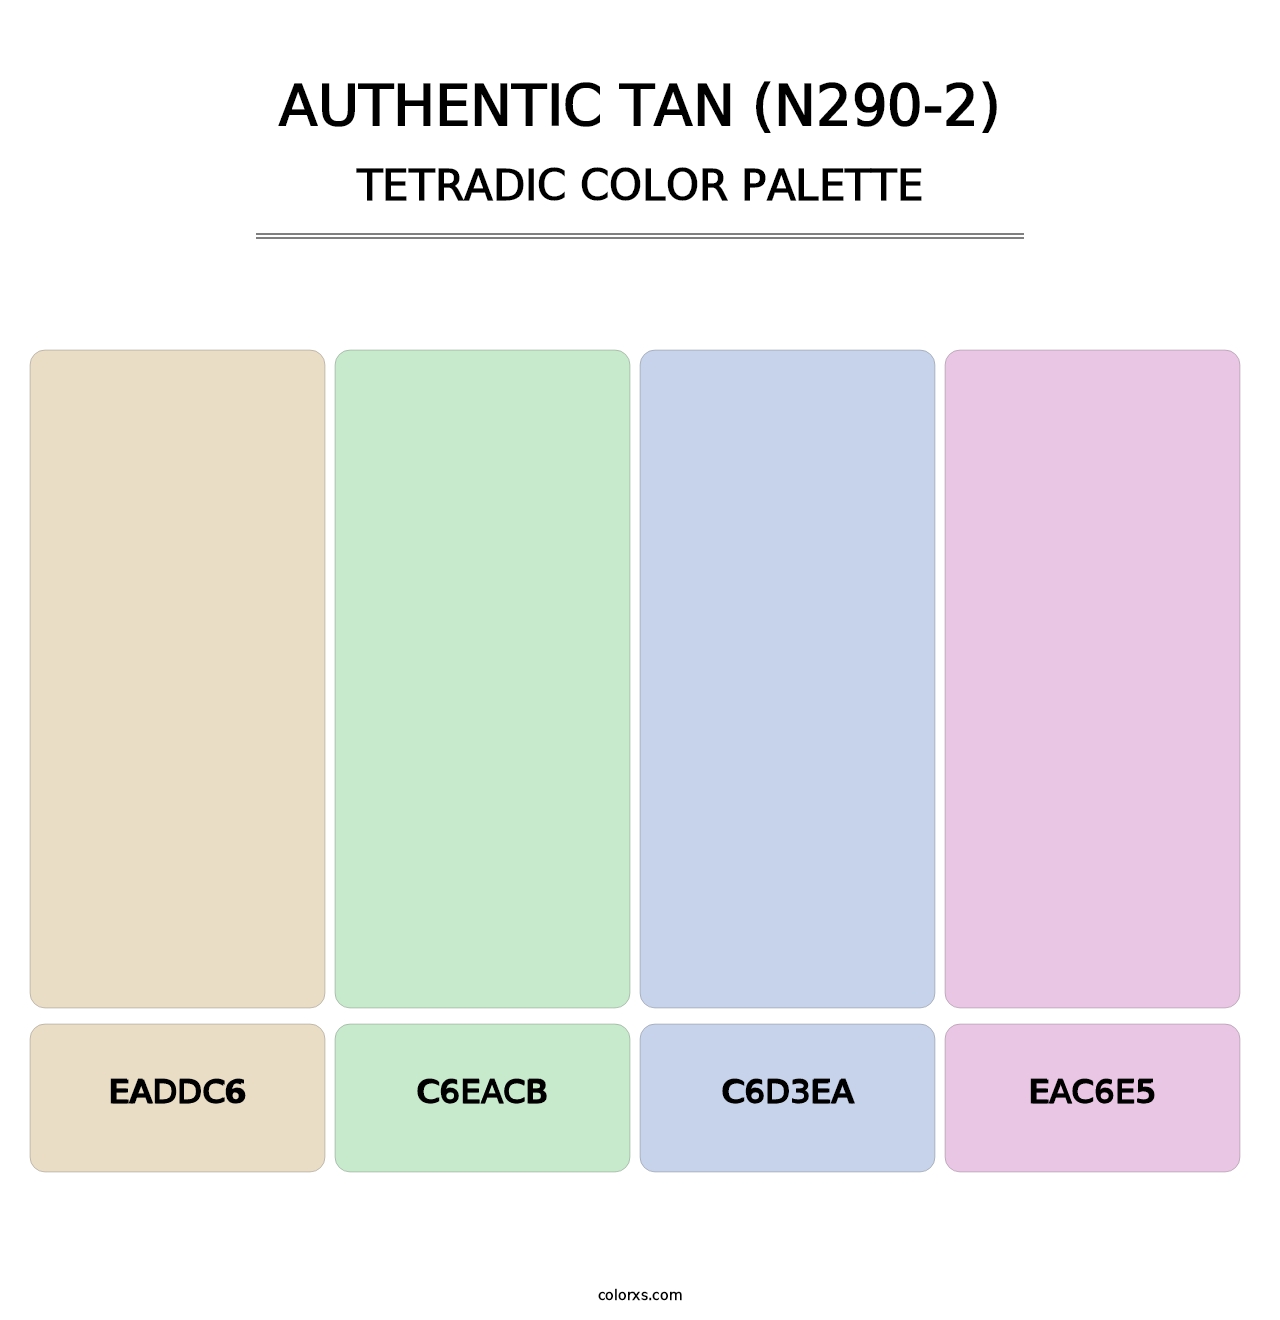 Authentic Tan (N290-2) - Tetradic Color Palette